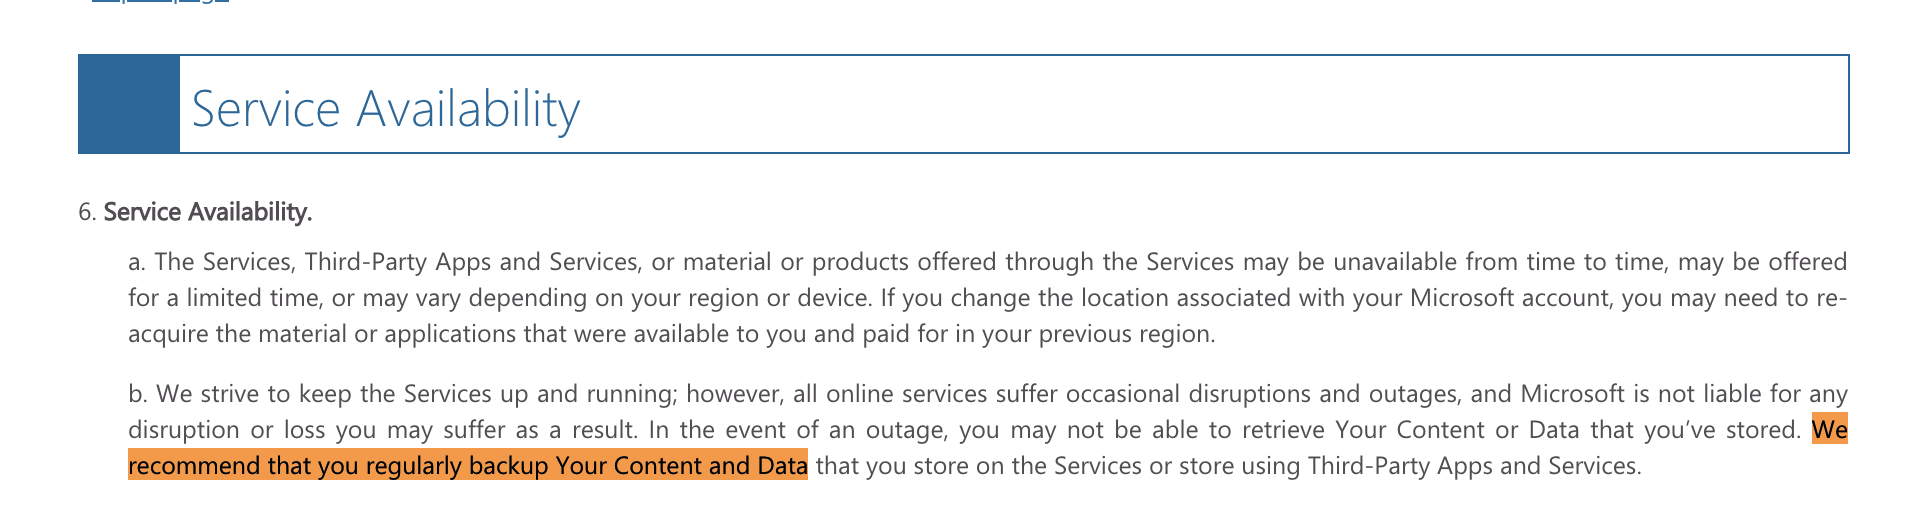 Microsoft 365 service agreement data backup